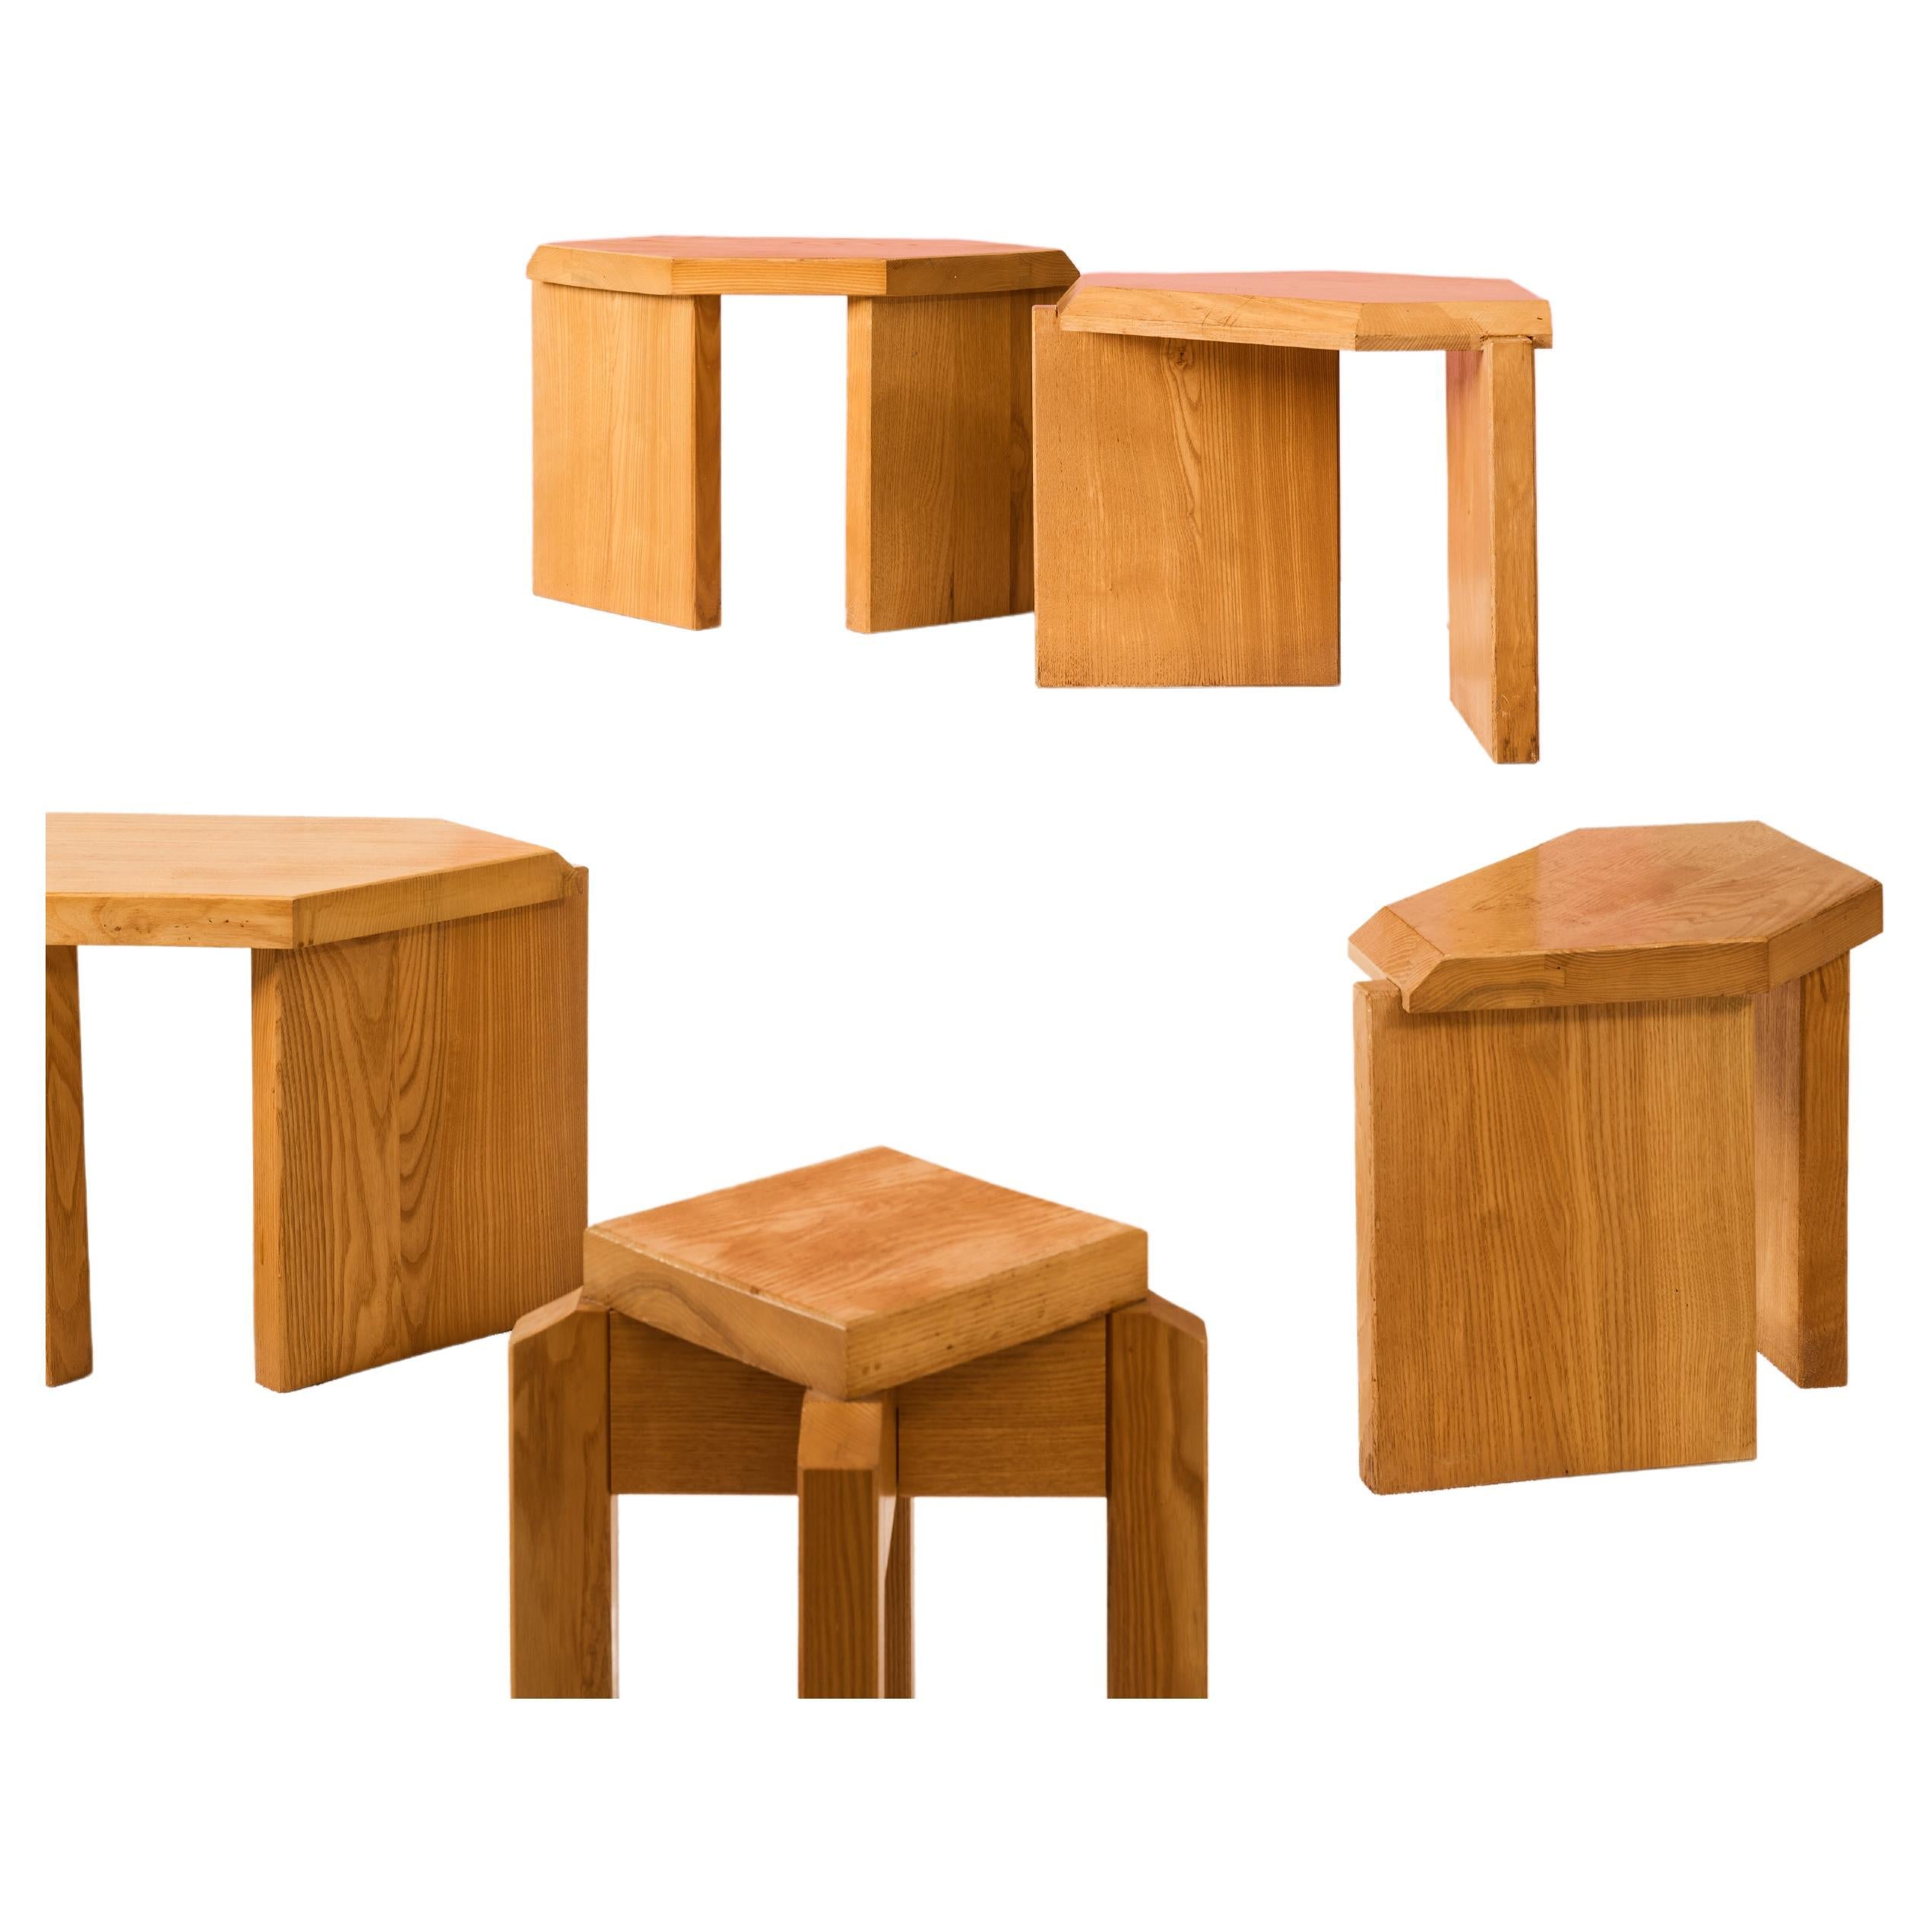 Modular Wooden Coffee Table